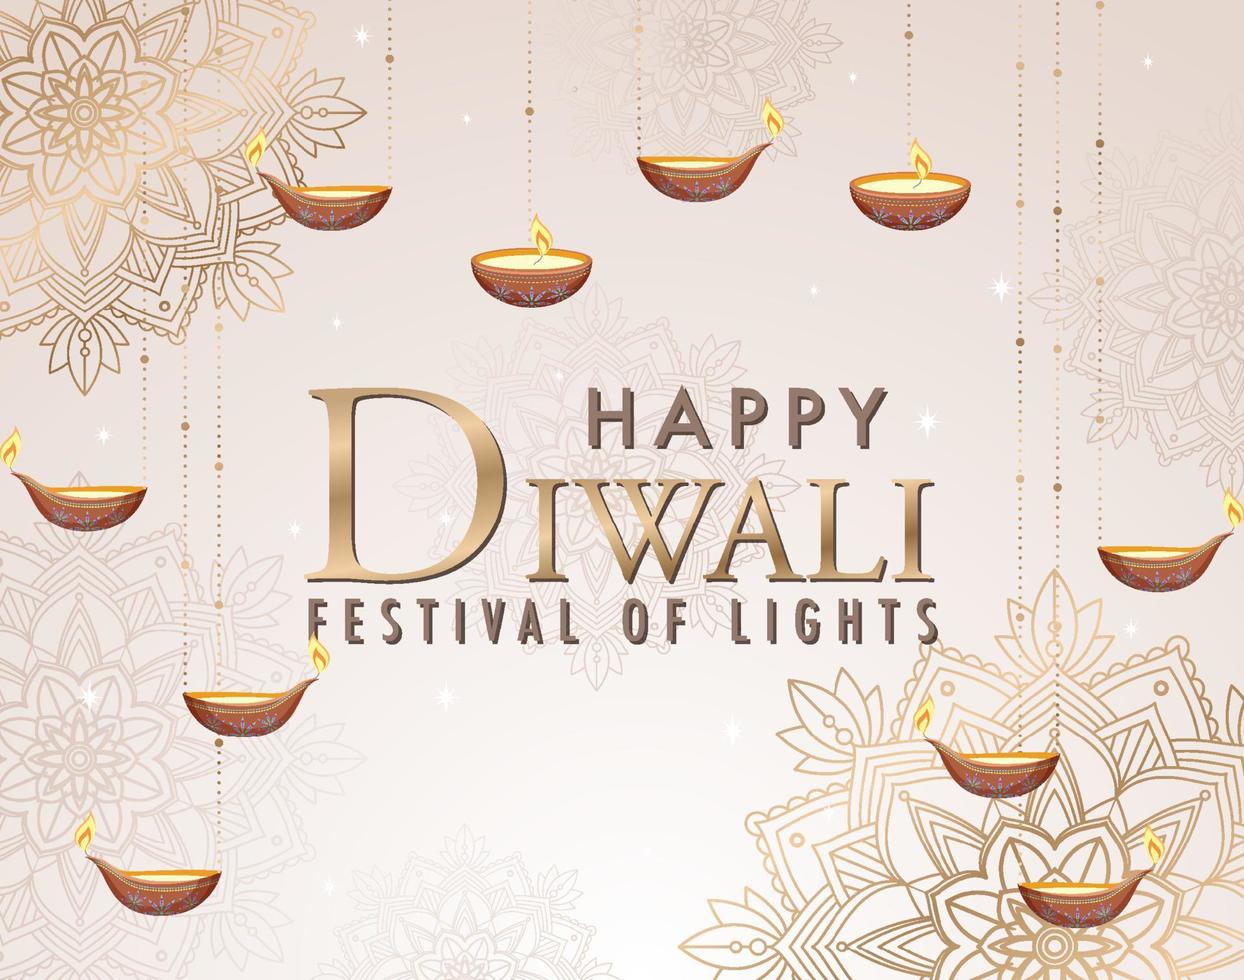 Happy Diwali festival of lights poster vector